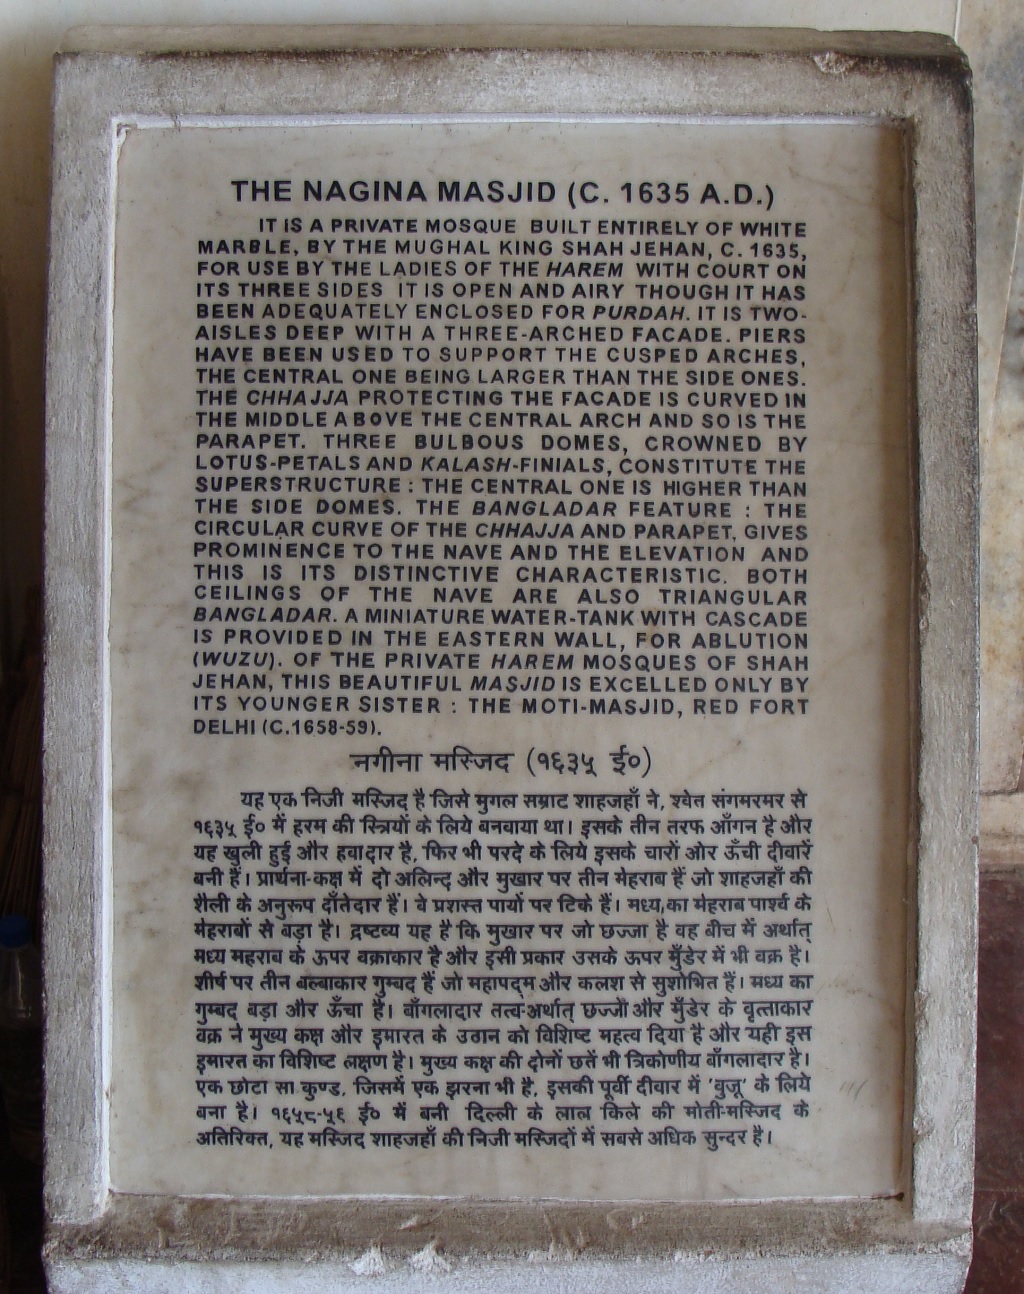 About: The Nagina Masjid (1635 A.D.)